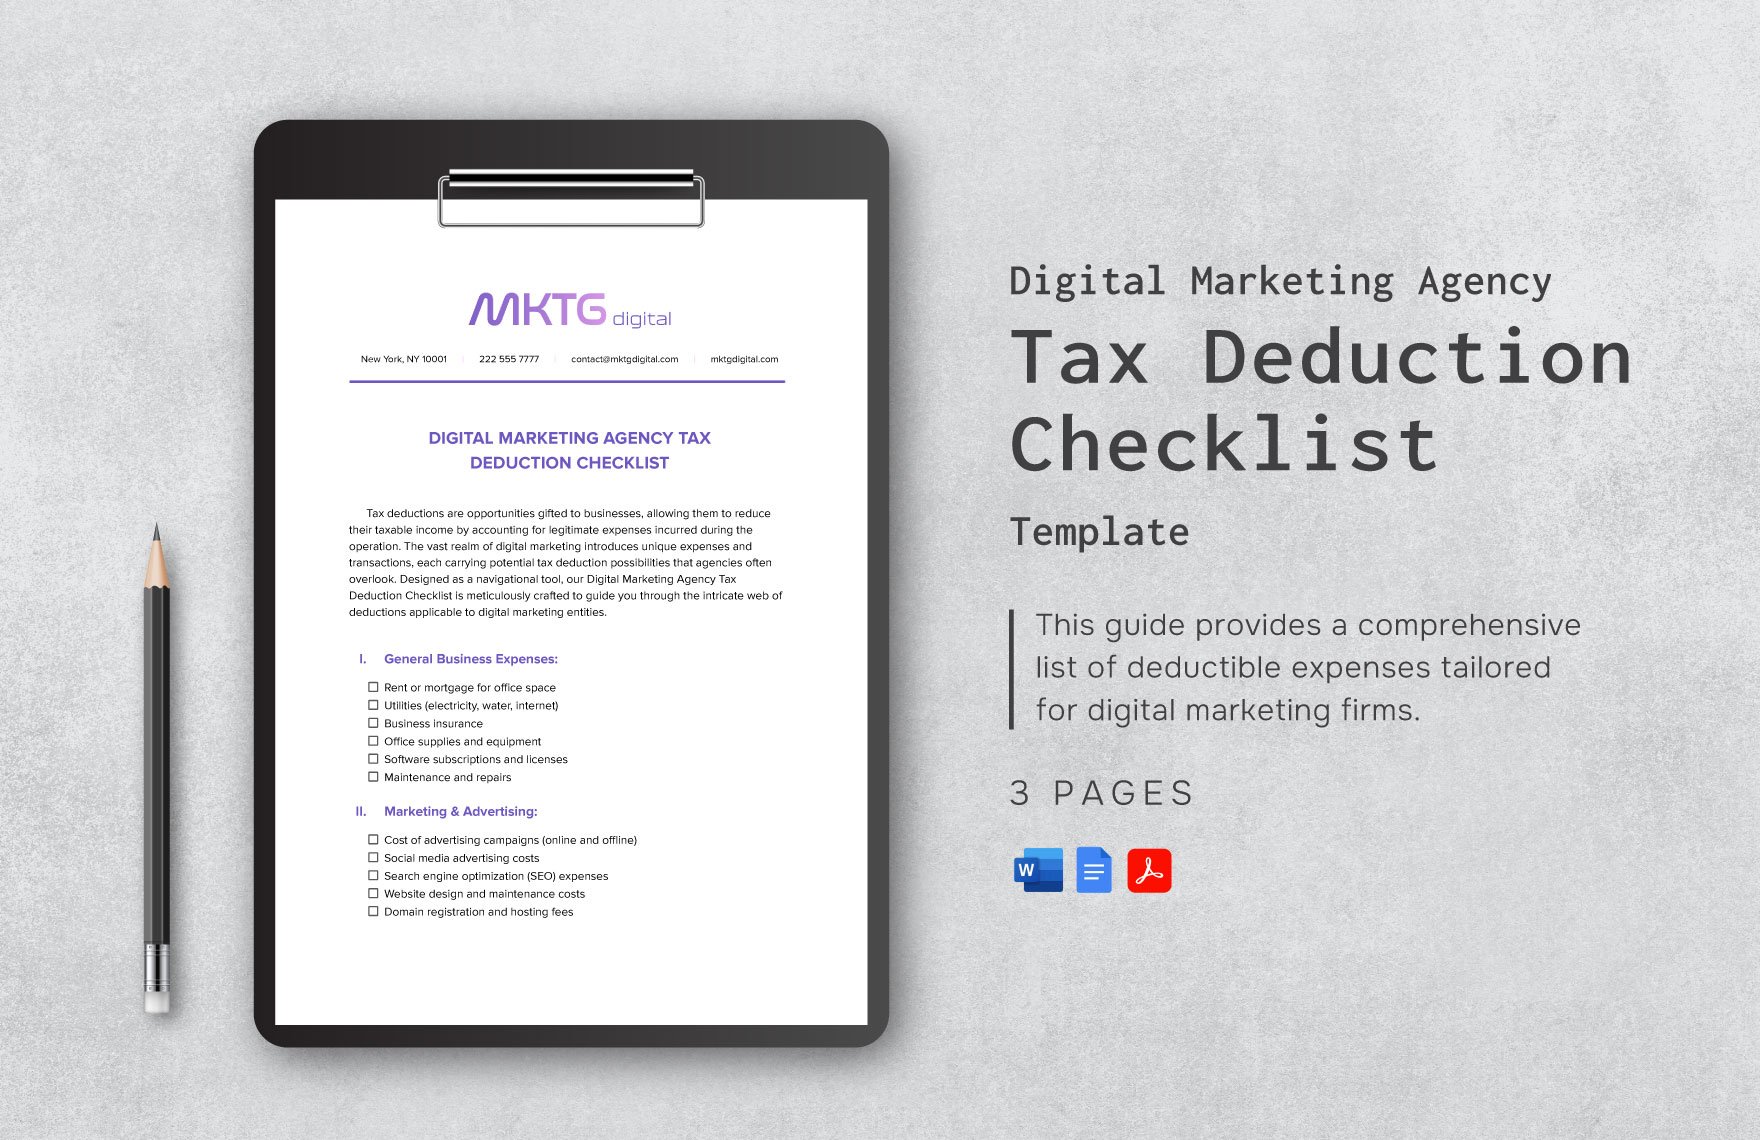 Digital Marketing Agency Tax Deduction Checklist Template in Word, Google Docs, PDF